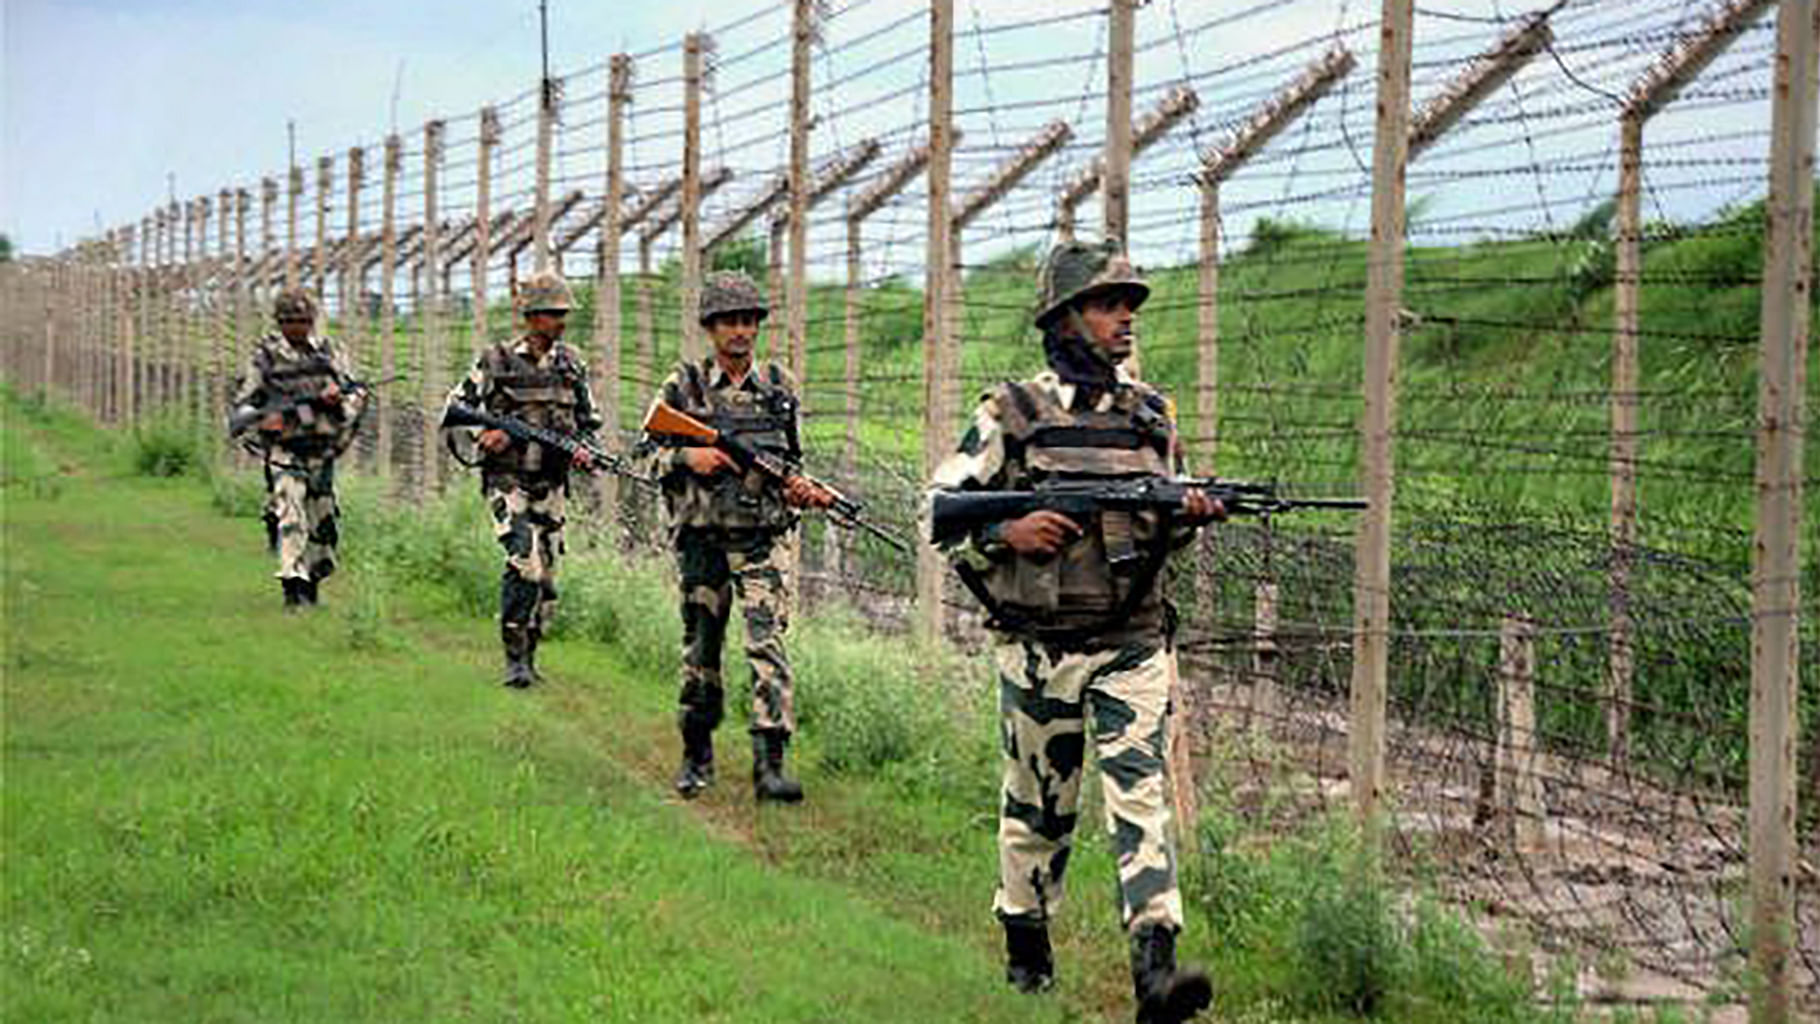 The BSF jawans patrol the India-Pakistan border. (Photo: PTI)